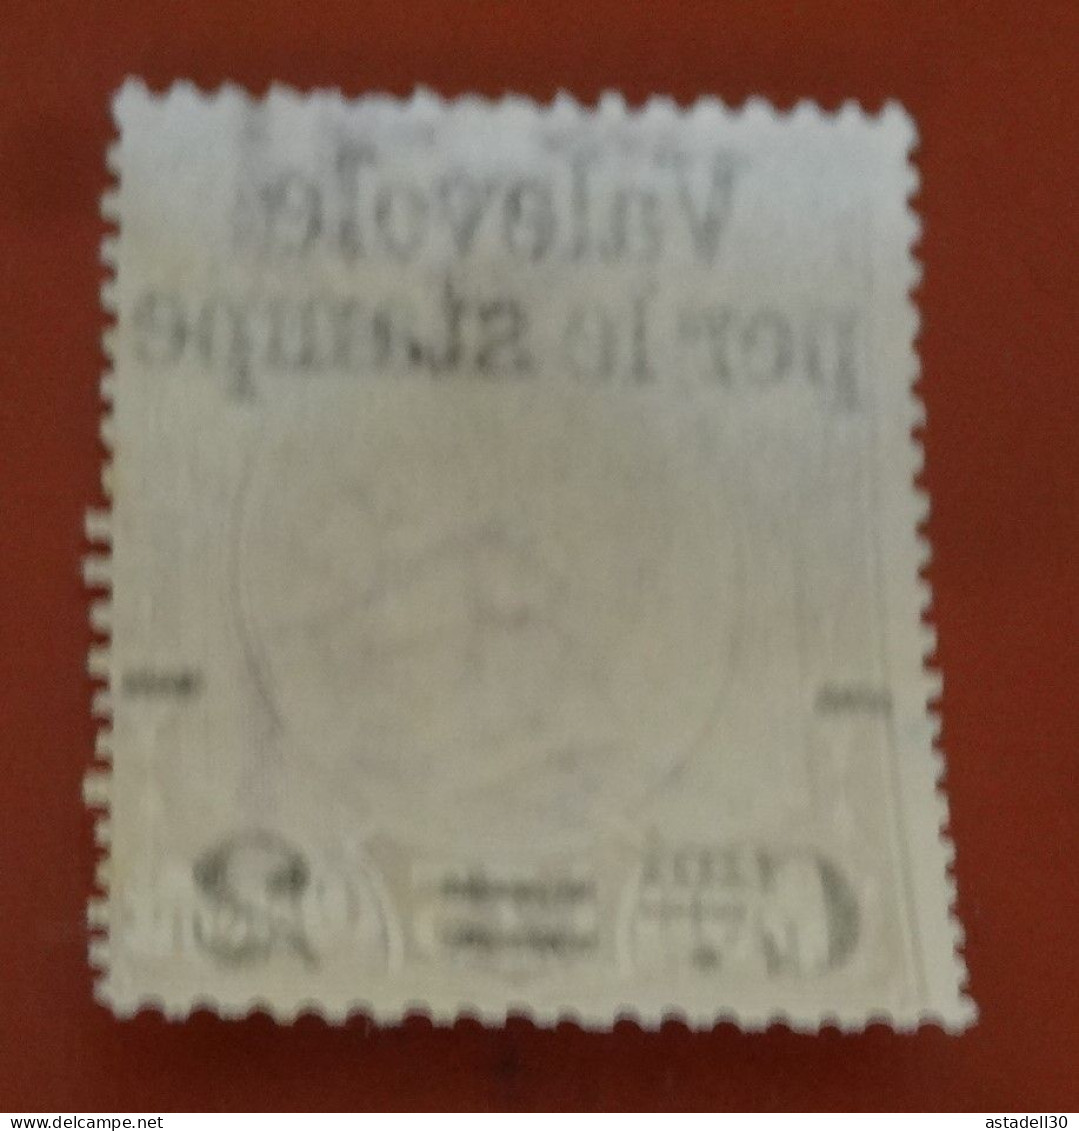 ITALIA - ITALIE Parcel Stamp 2c / 1.75c Marron - 1890, Mint NO GUM  ............ CL1-1-1b - Postpaketten